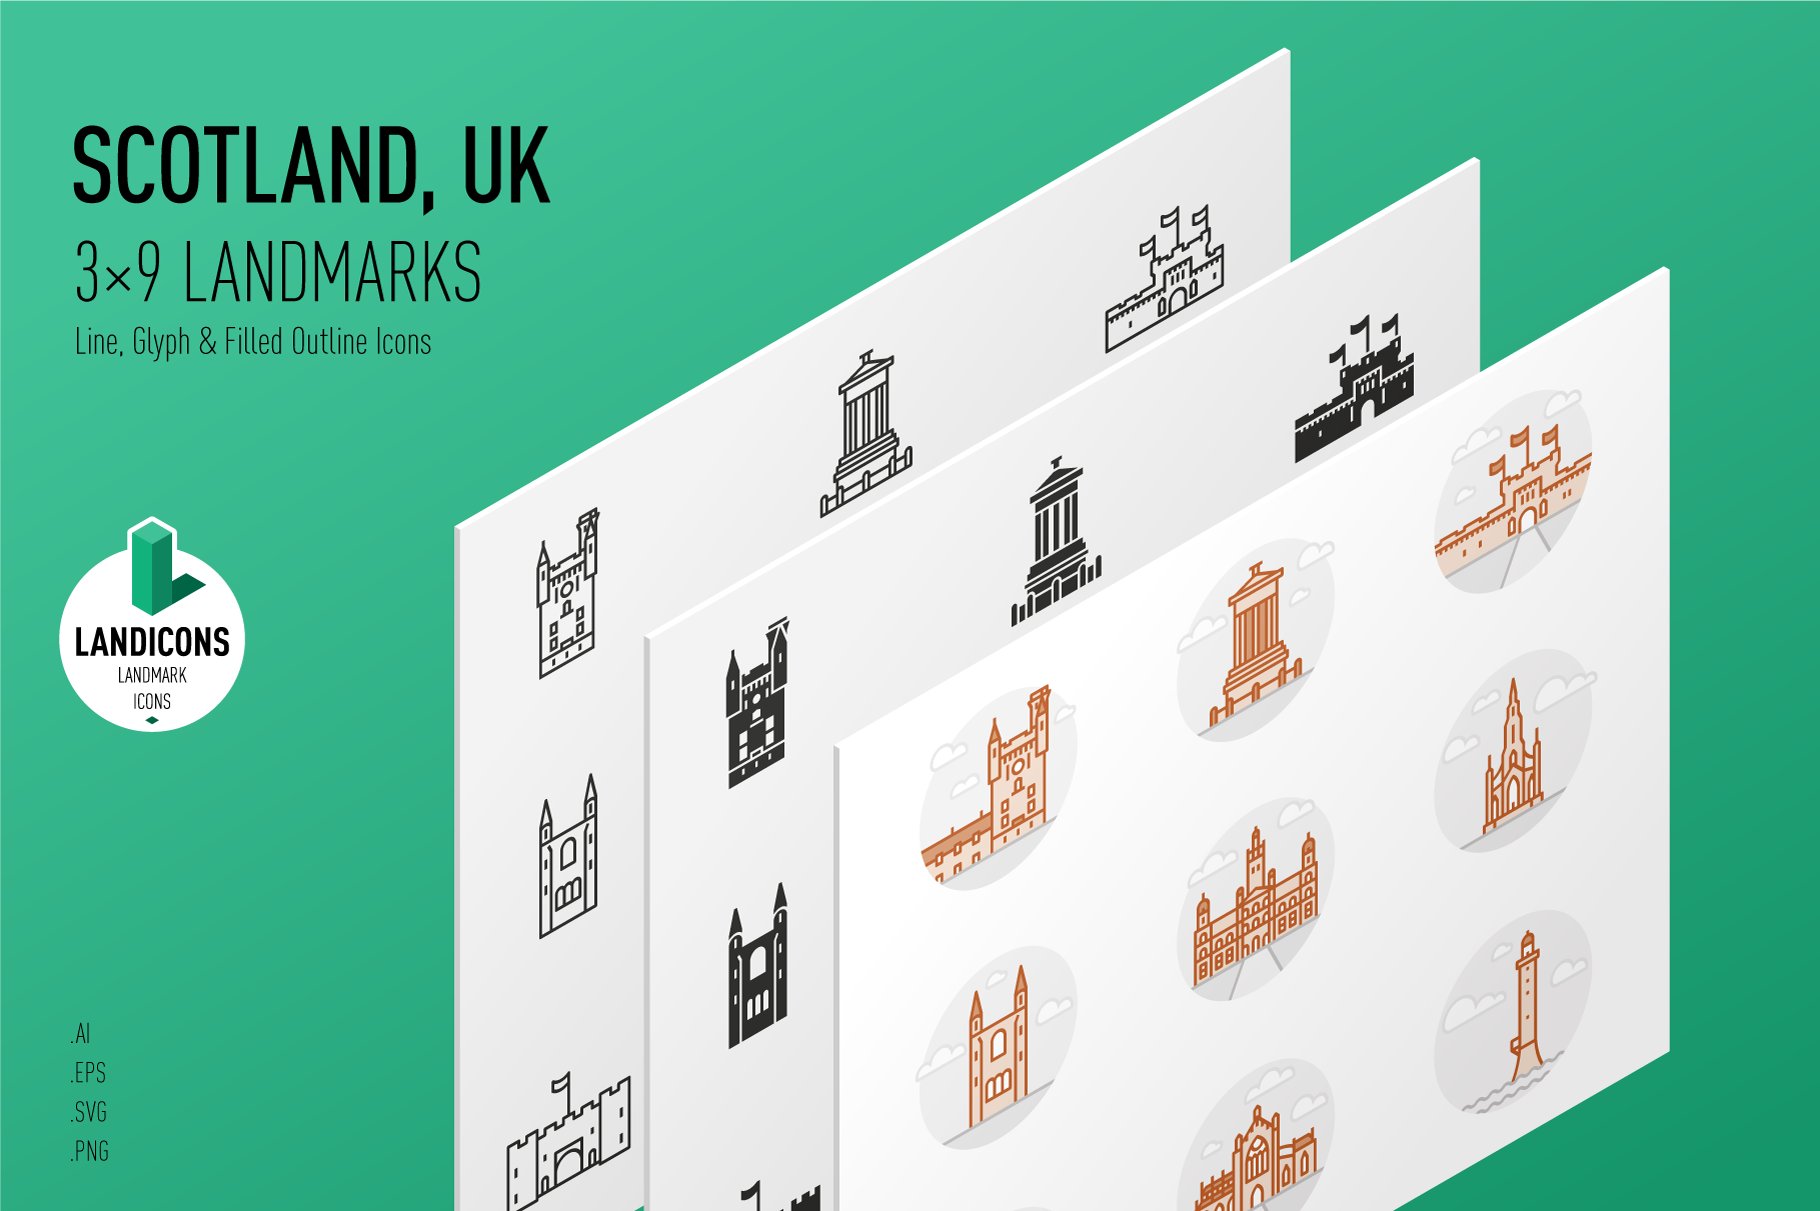 Landmarks of the UK - Scotland cover image.